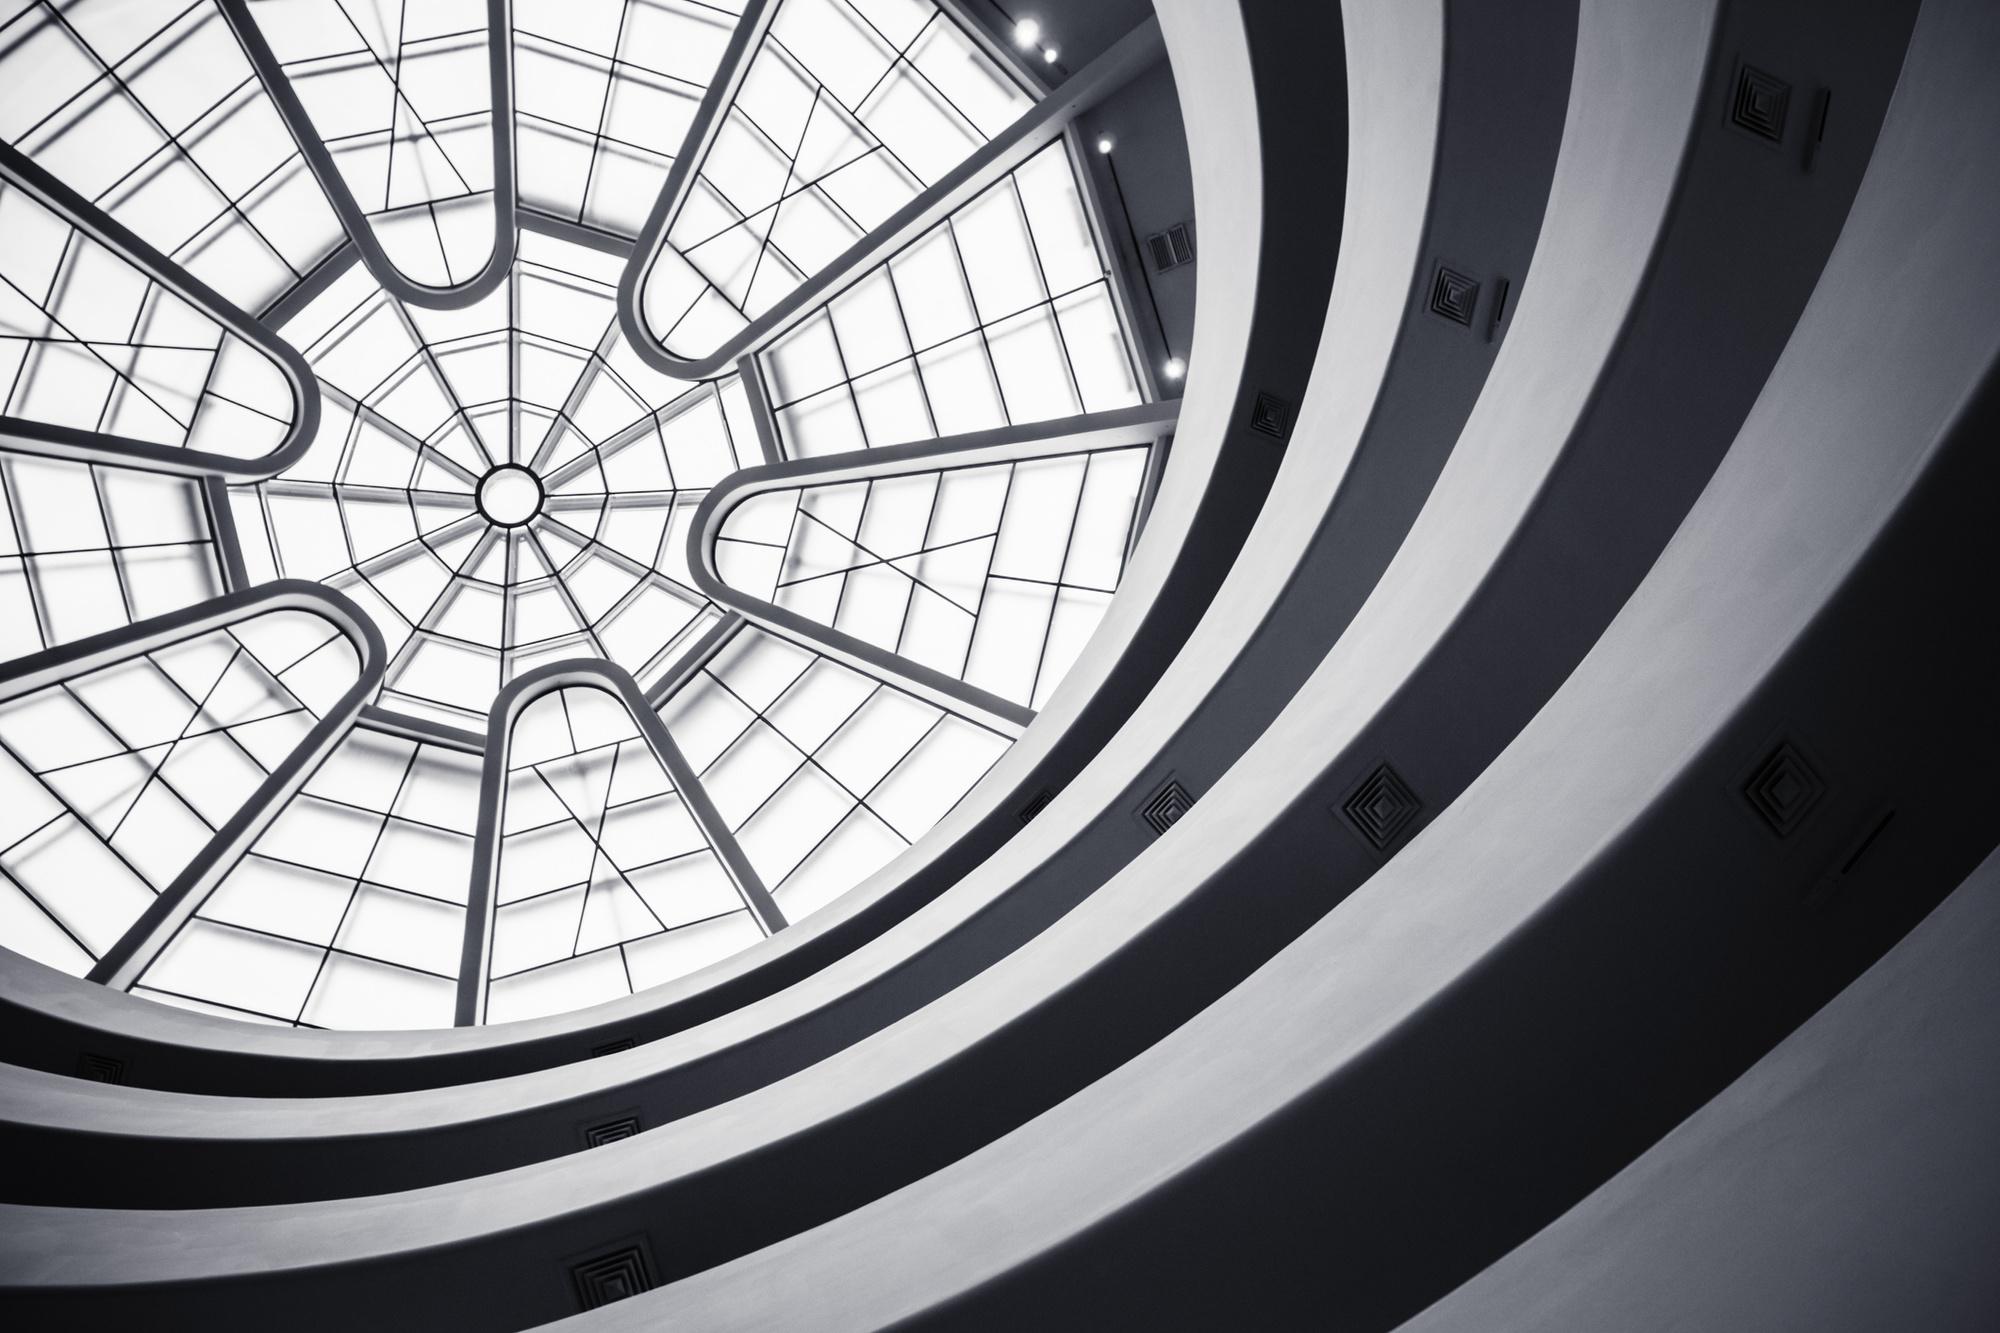 Binnenin het Guggenheim-museum in New York van architect Frank Lloyd Wright